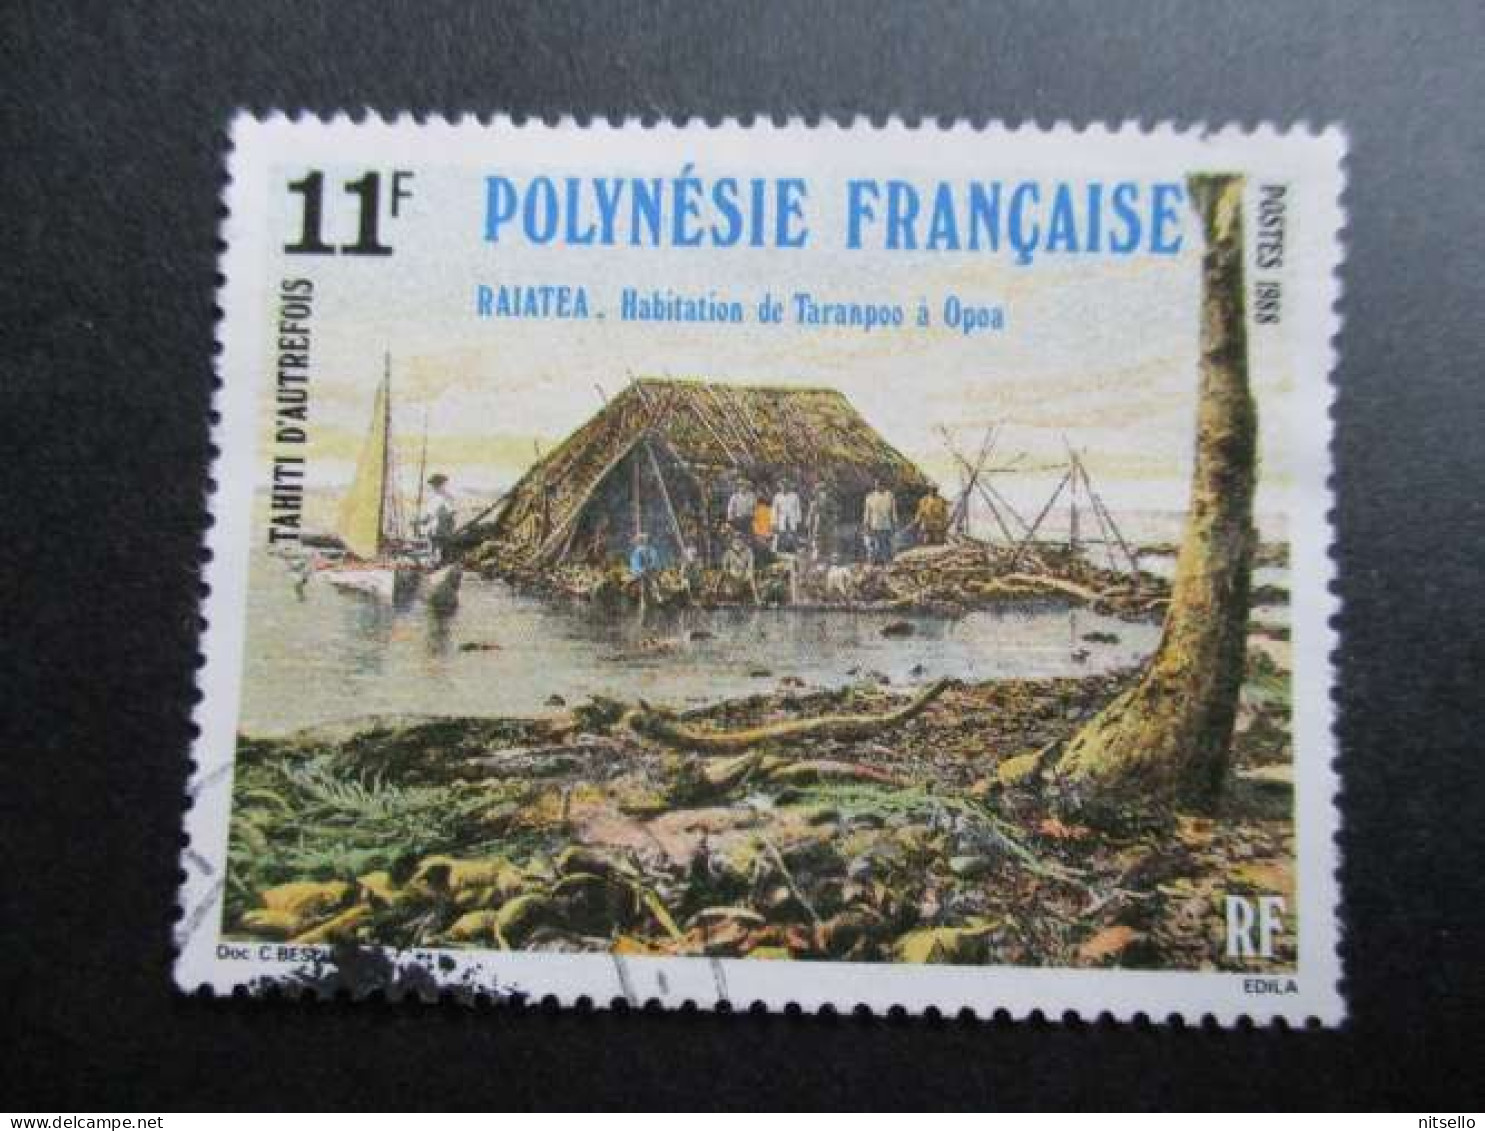 LOTE 2202A ///  (C010)  POLINESIA FRANCESA  - YVERT Nº: 299 OBL 1988     ¡¡¡ OFERTA - LIQUIDATION - JE LIQUIDE !!! - Used Stamps